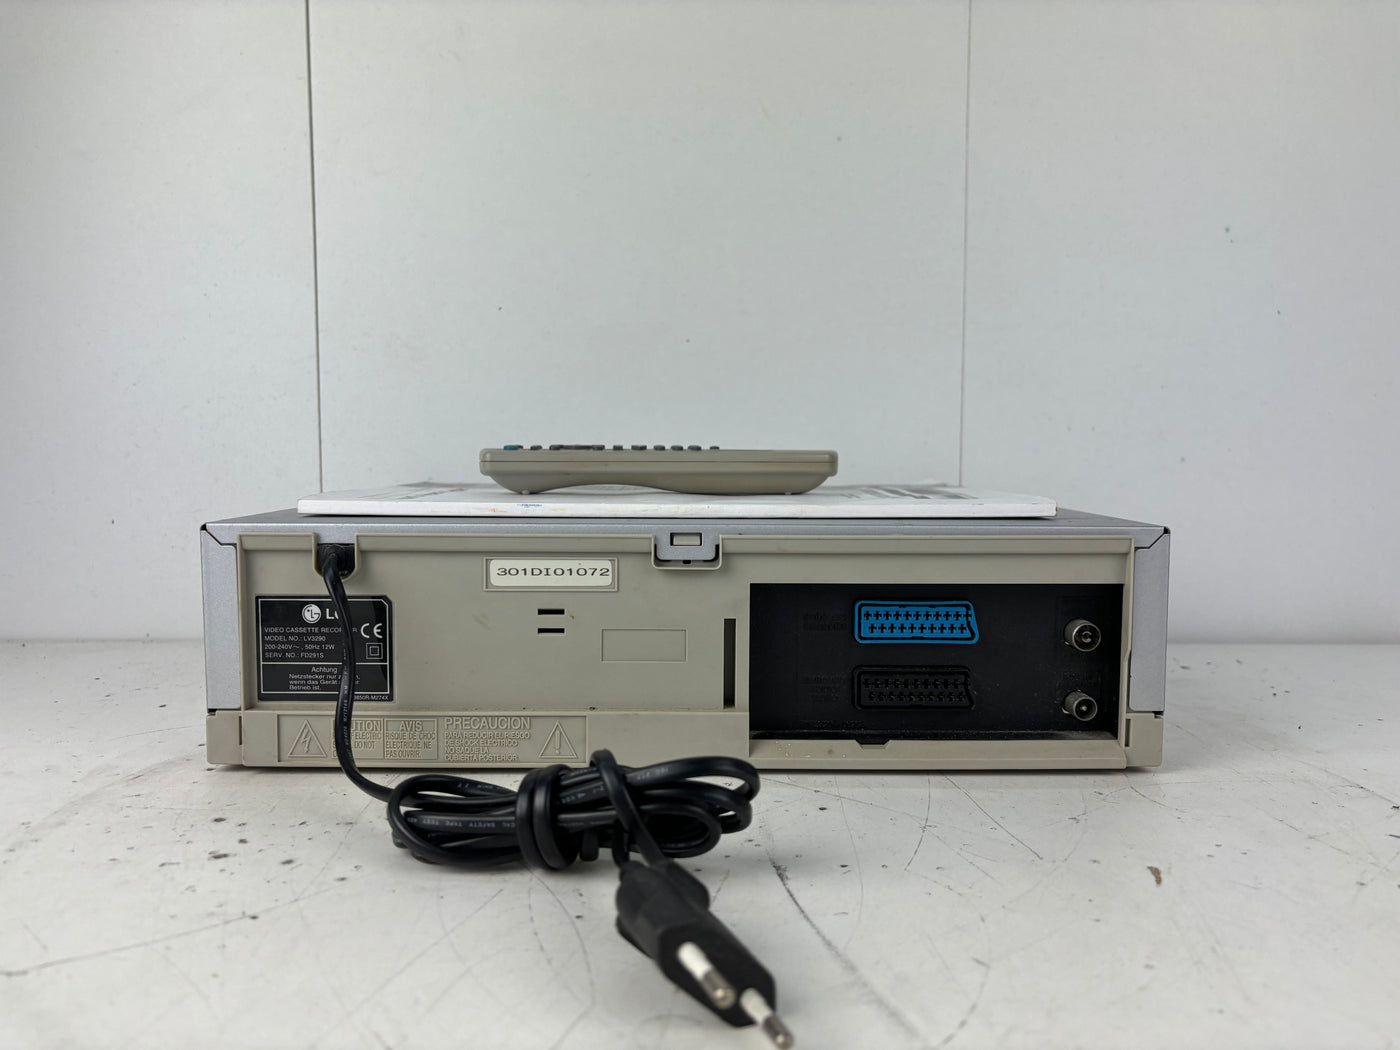 LG LV3290 VHS Videorecorder -